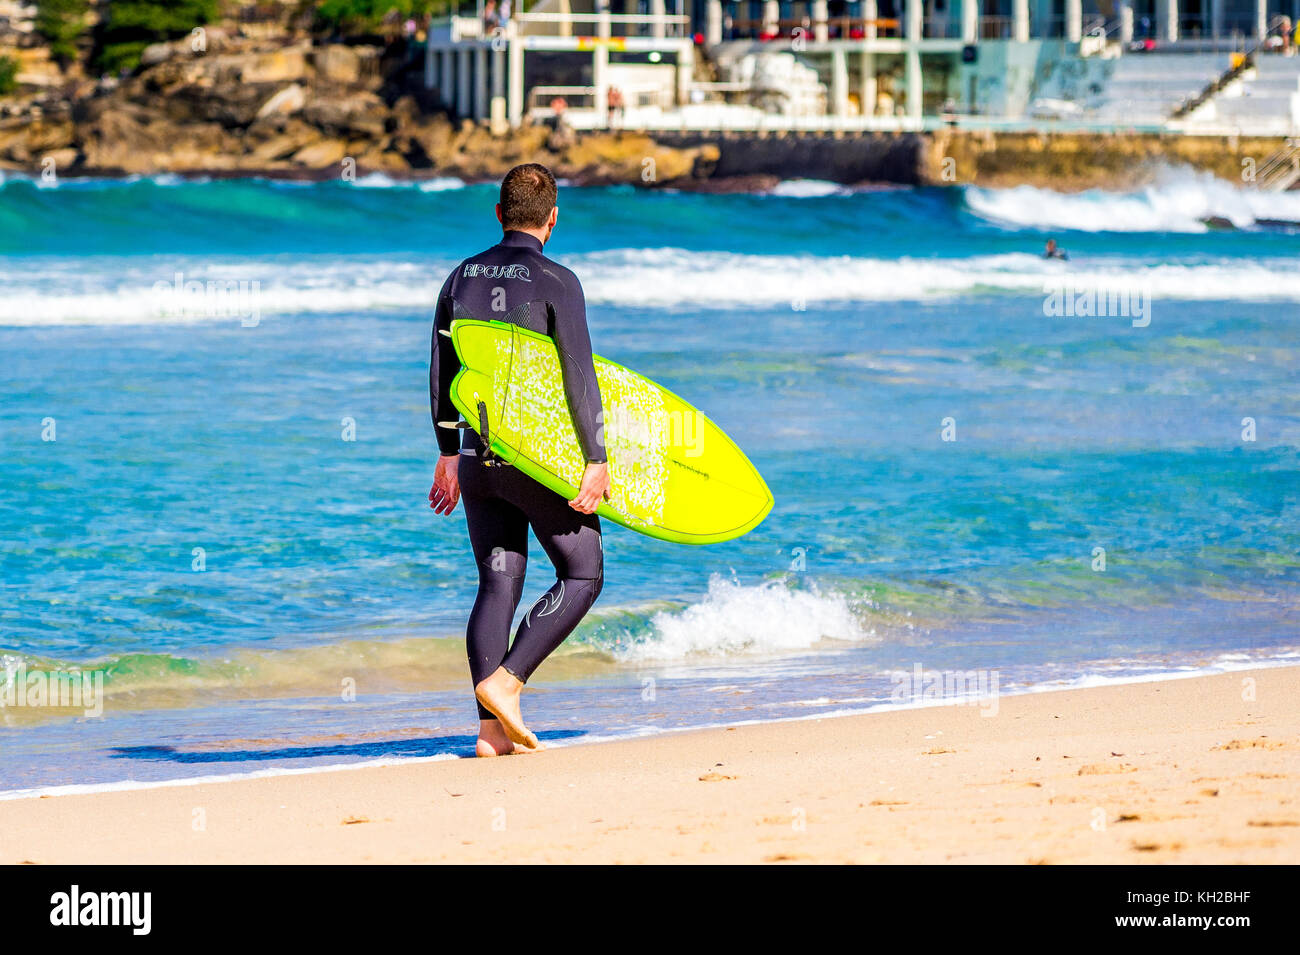 A surfer enters the water at Bondi Beach, Sydney, NSW, Australia Stock Photo